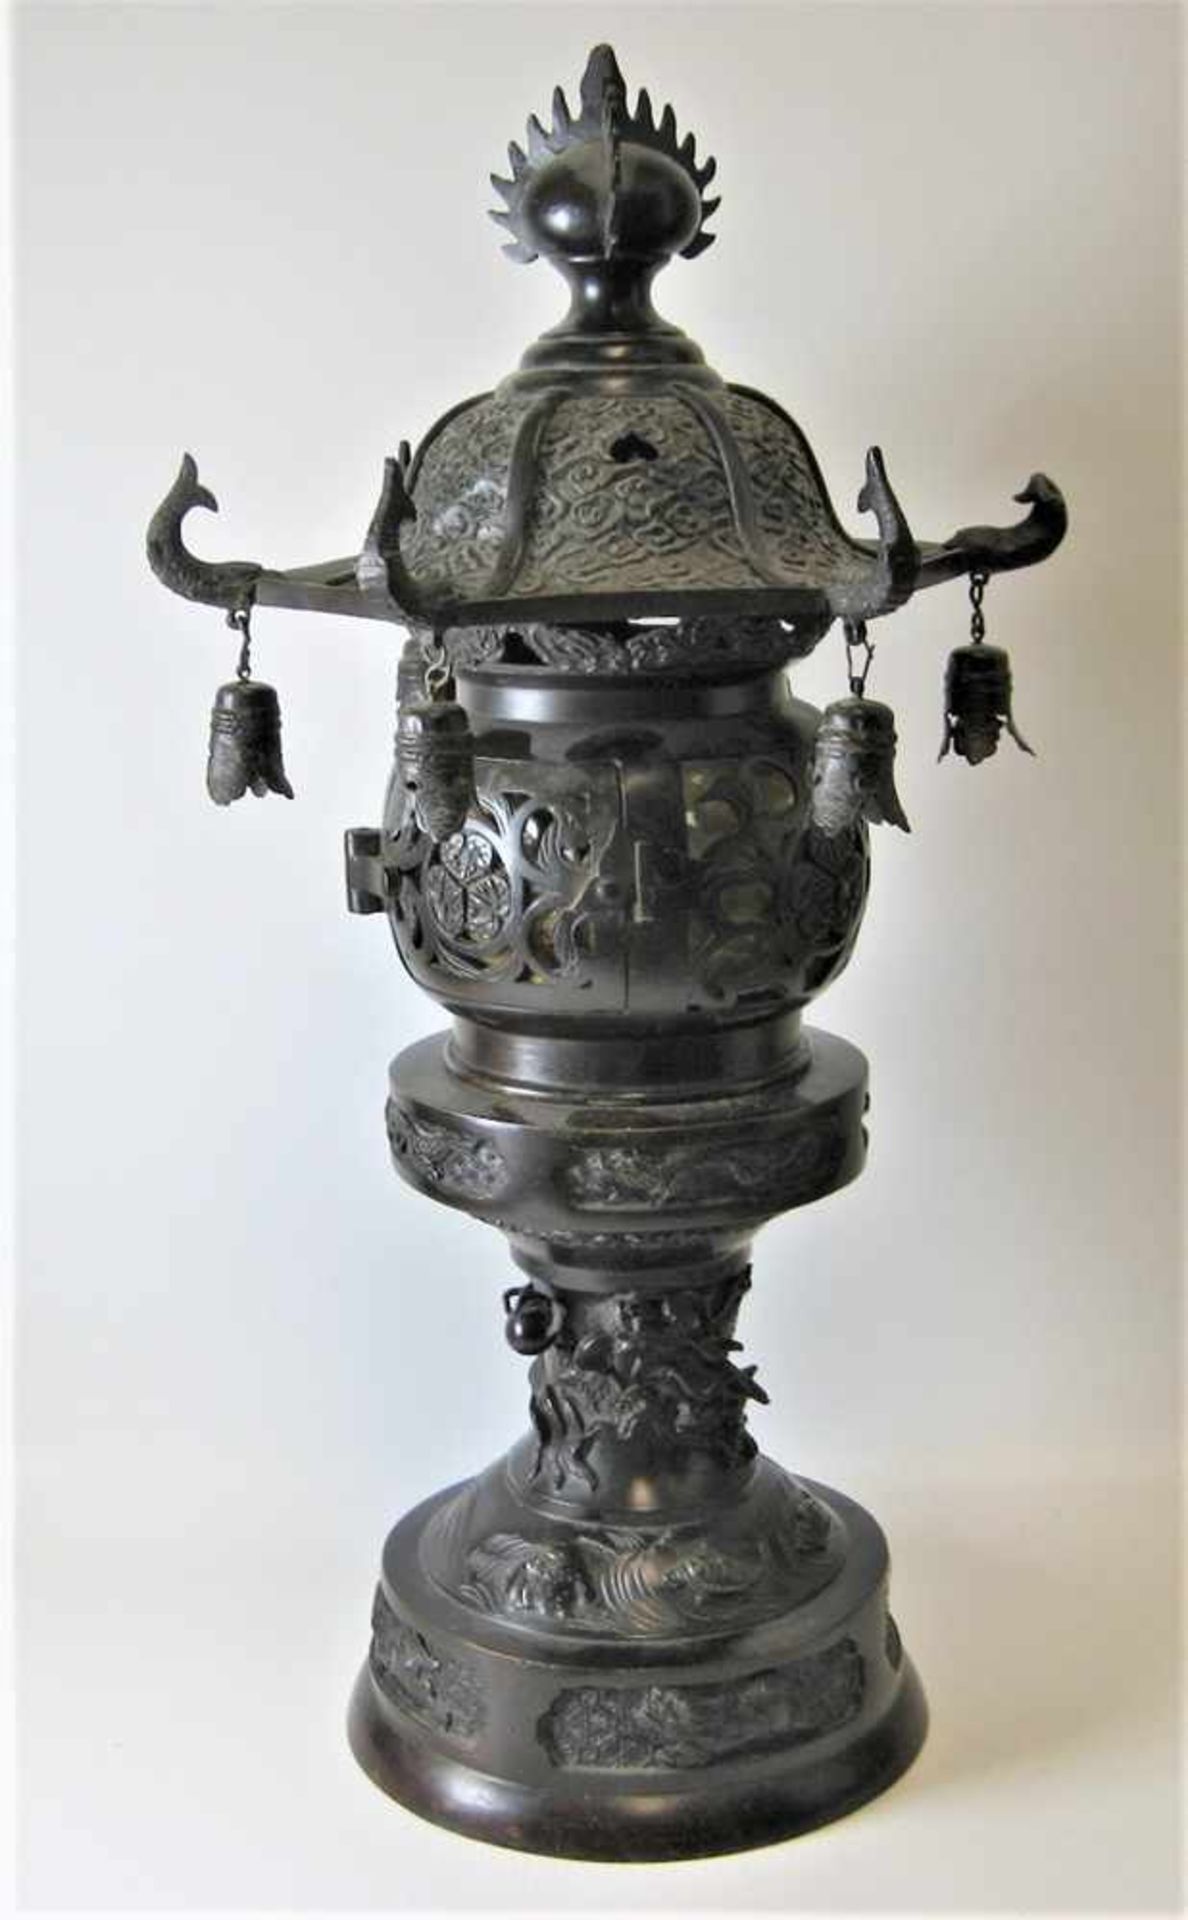 Lampe, China, um 1900, Bronze reich verziert, h 48 cm, d 24,5 cm.- - -19.00 % buyer's premium on the - Image 2 of 3